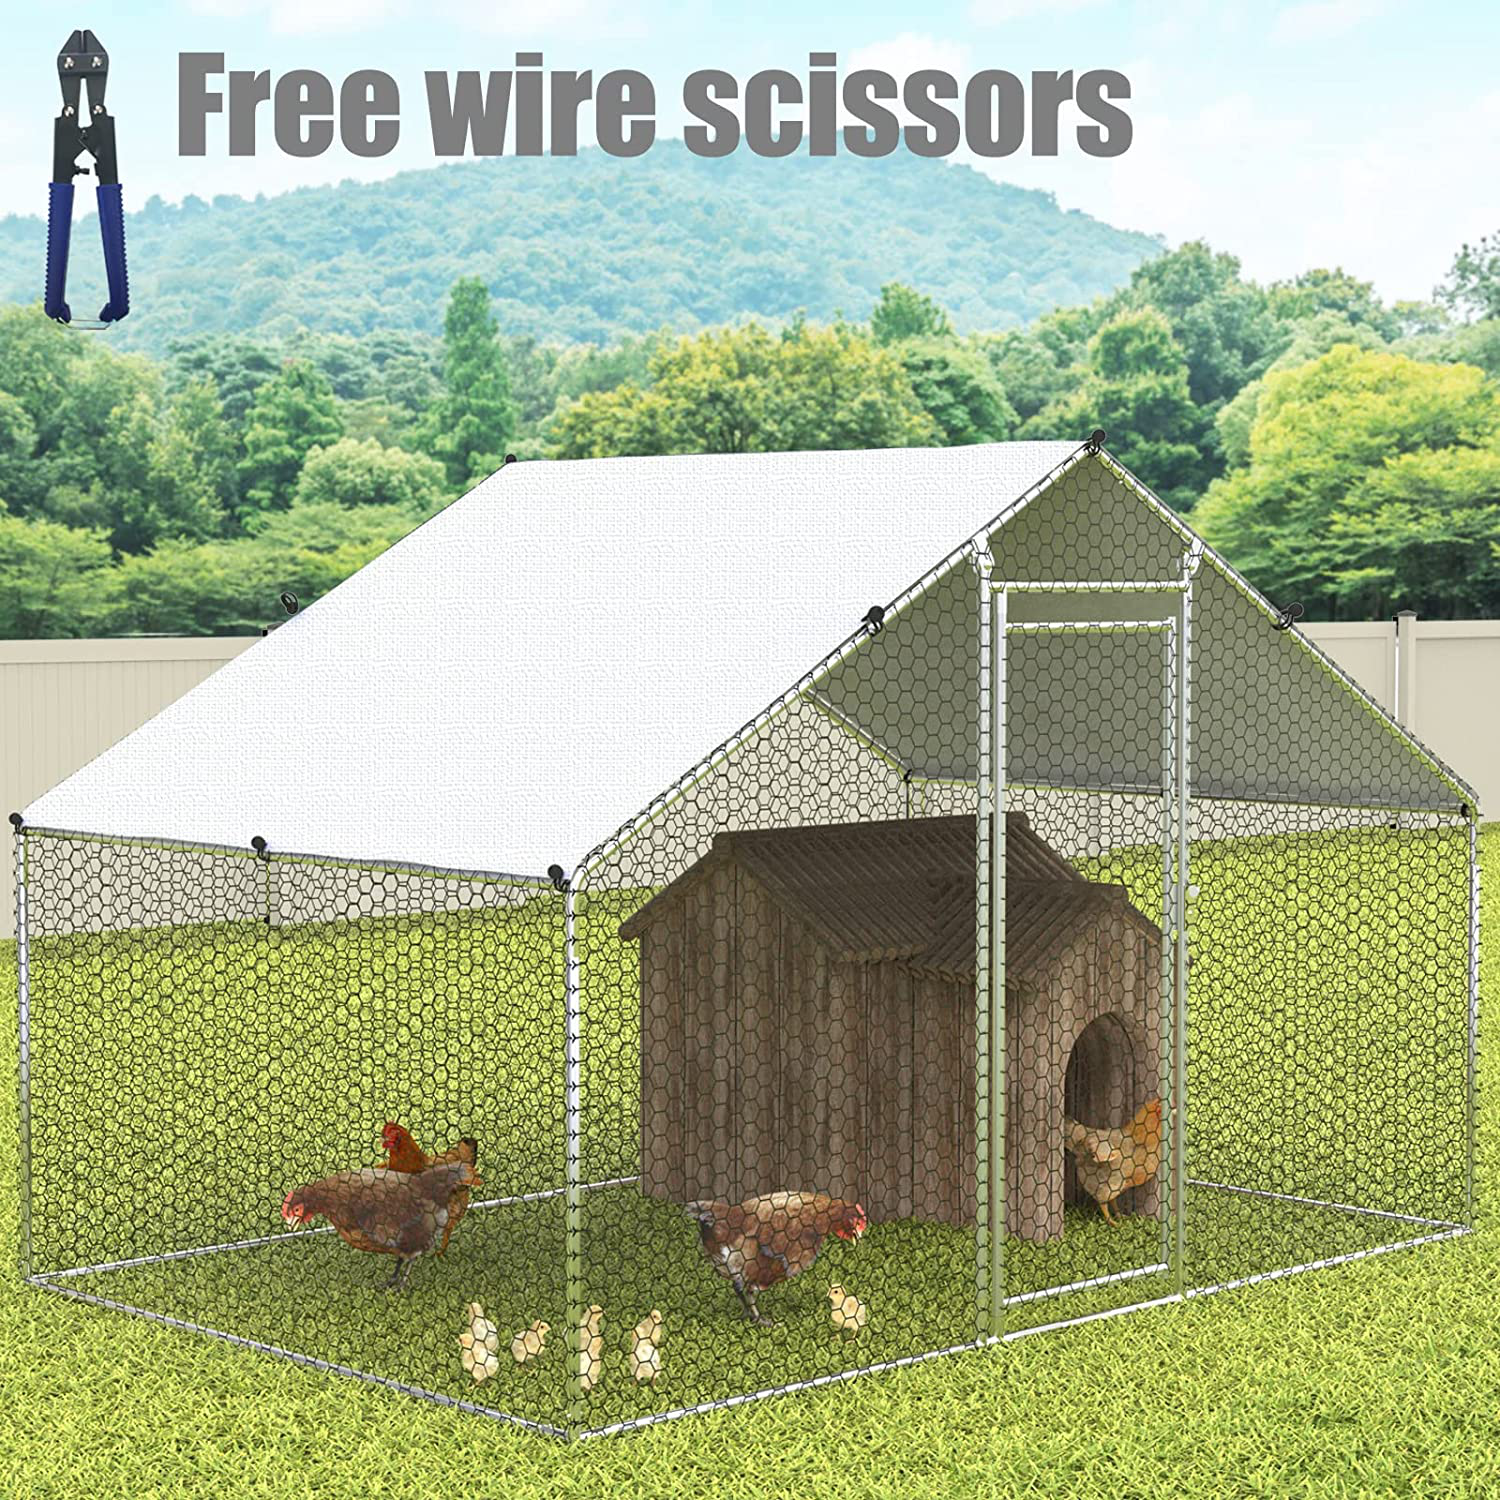 Chicken Coop, Walk-In Chincken Run Hen House Rabbits Habitat Cage with Waterproof Cover Enclosure Playpen for Backyard Farm